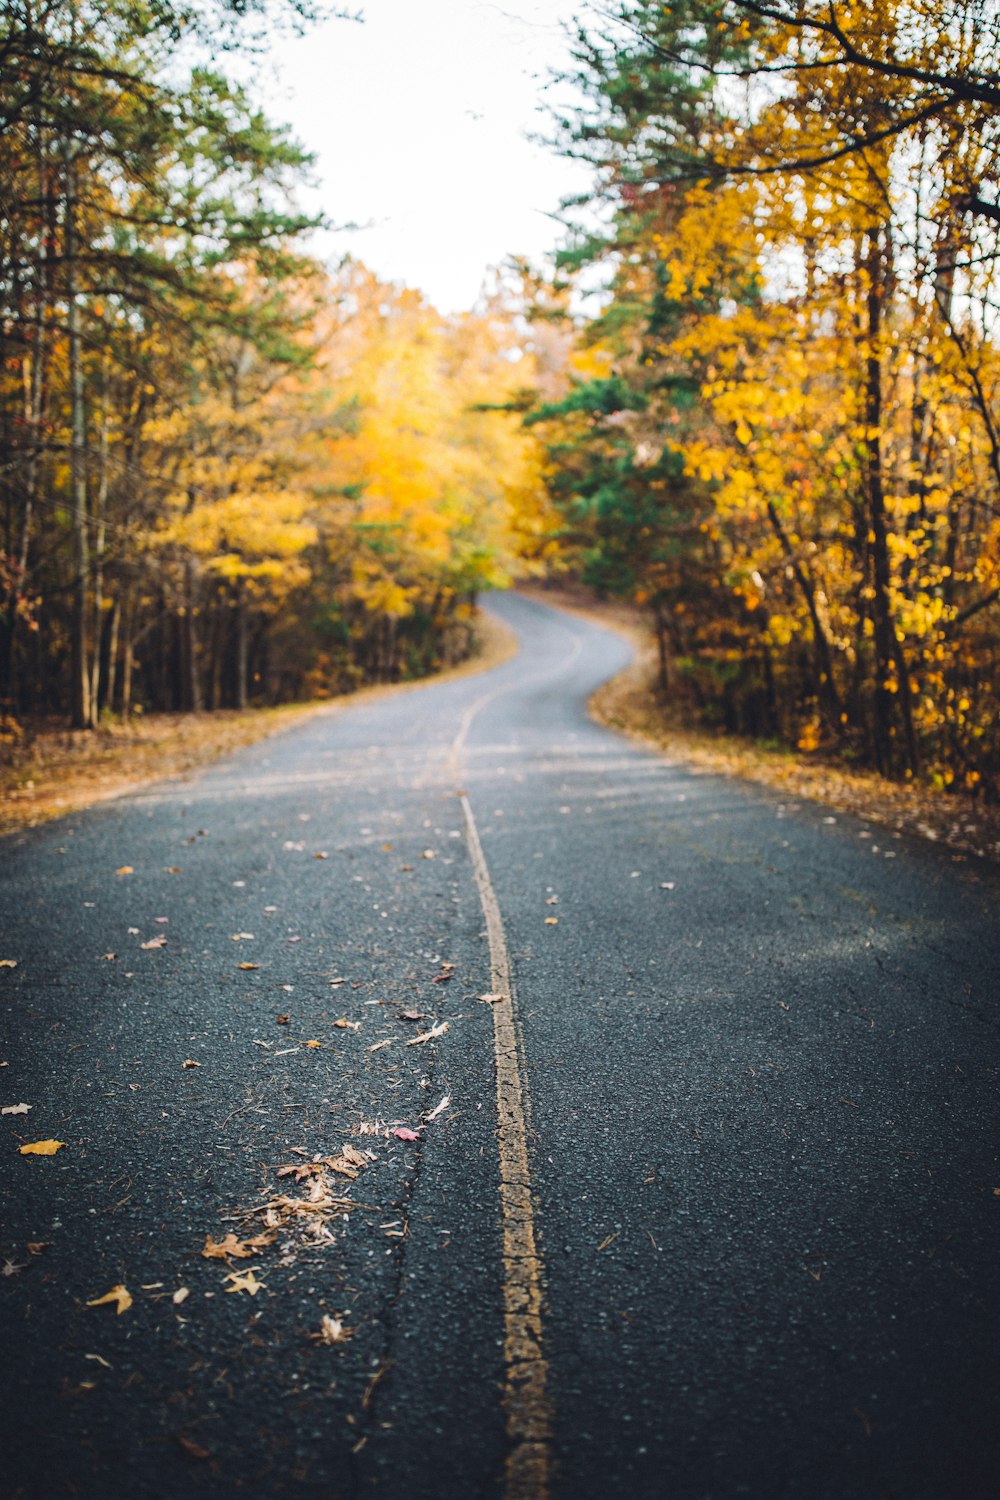 asphalt road between yellow leaf trees during daytime